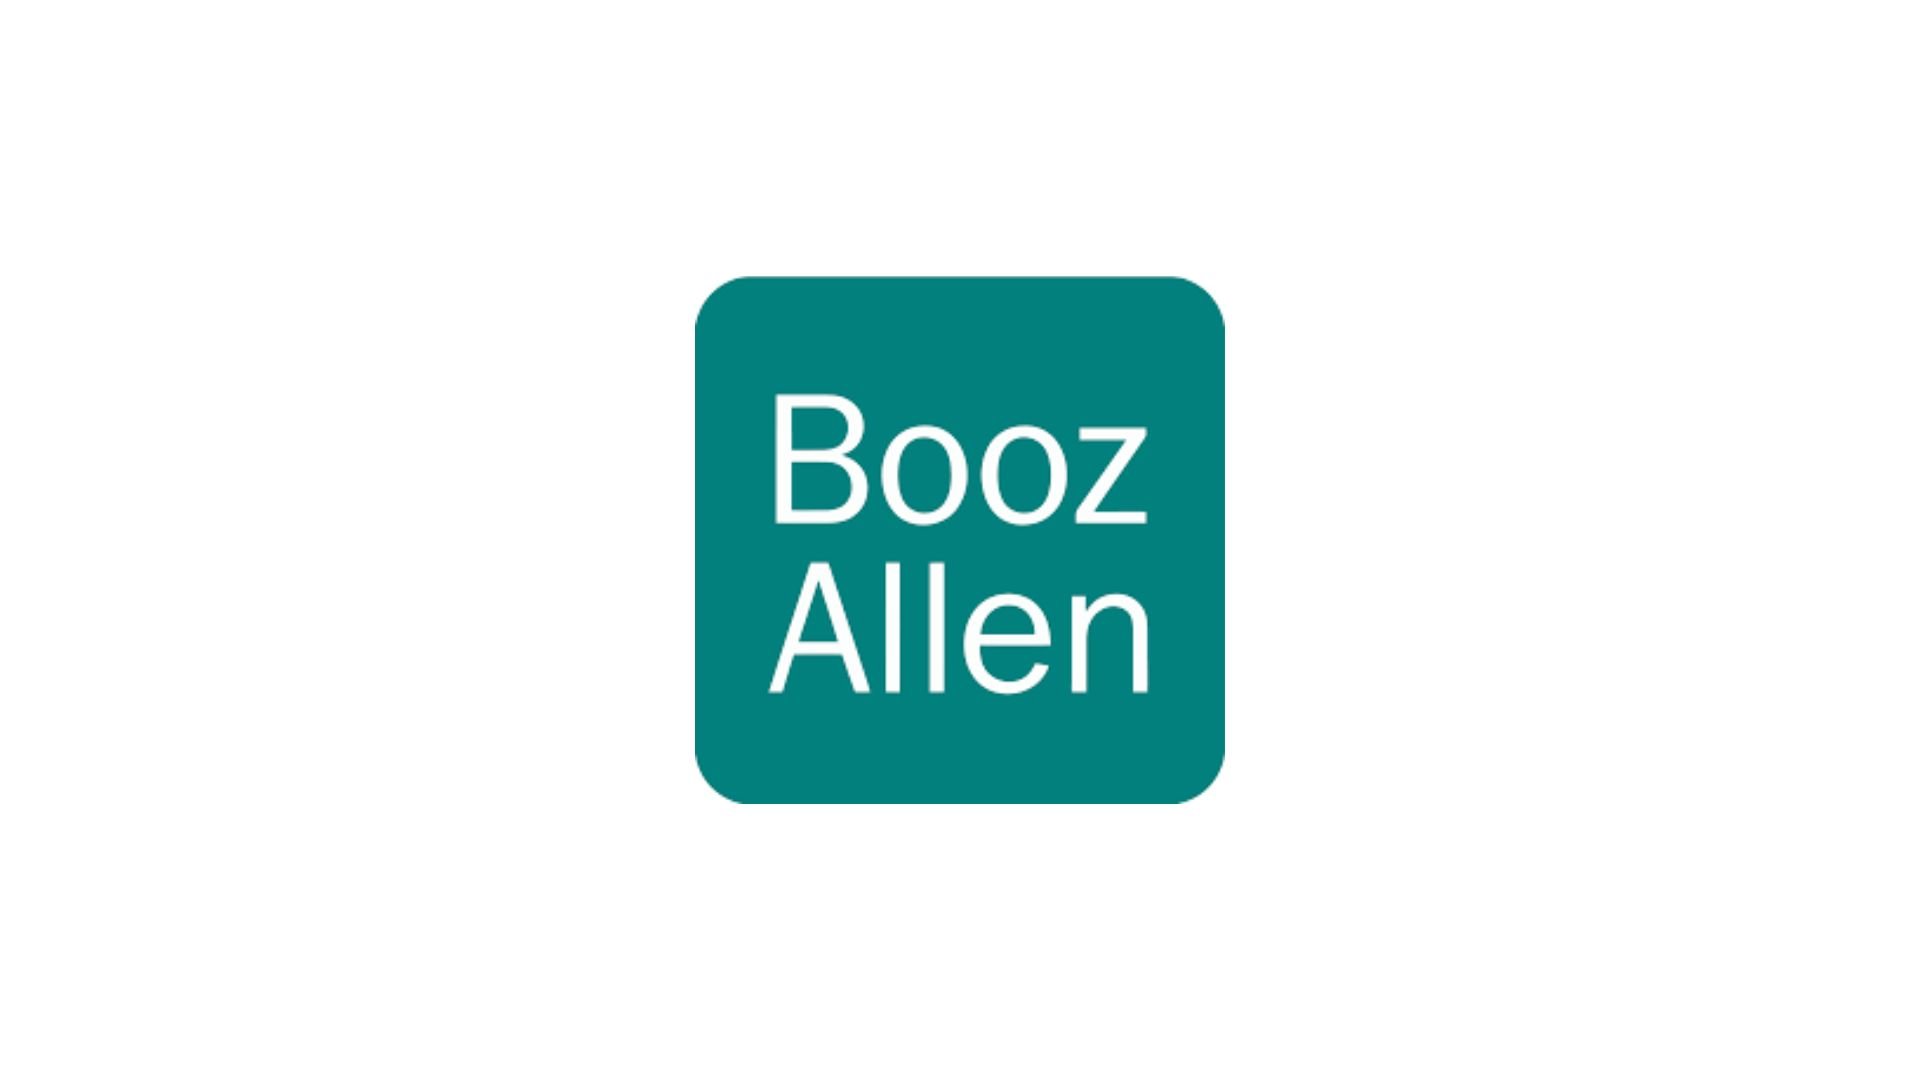 CLS Service Works with the Booz Allen.jpg